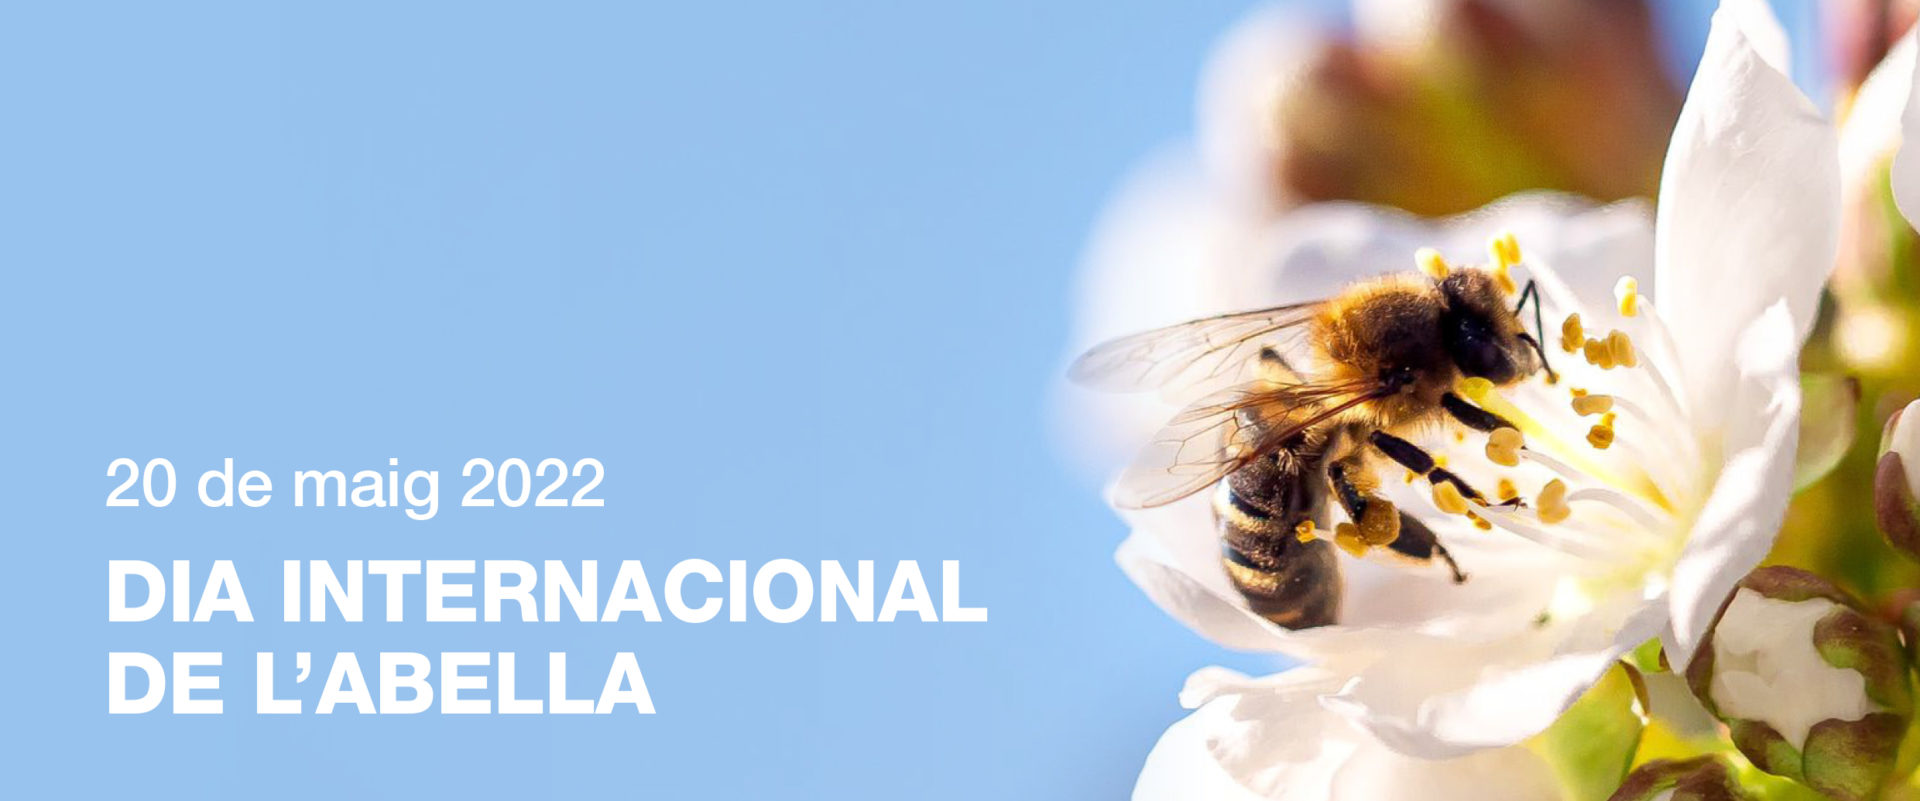 dia-internacional-abella-2022.jpg_335993394.jpg?profile=RESIZE_400x